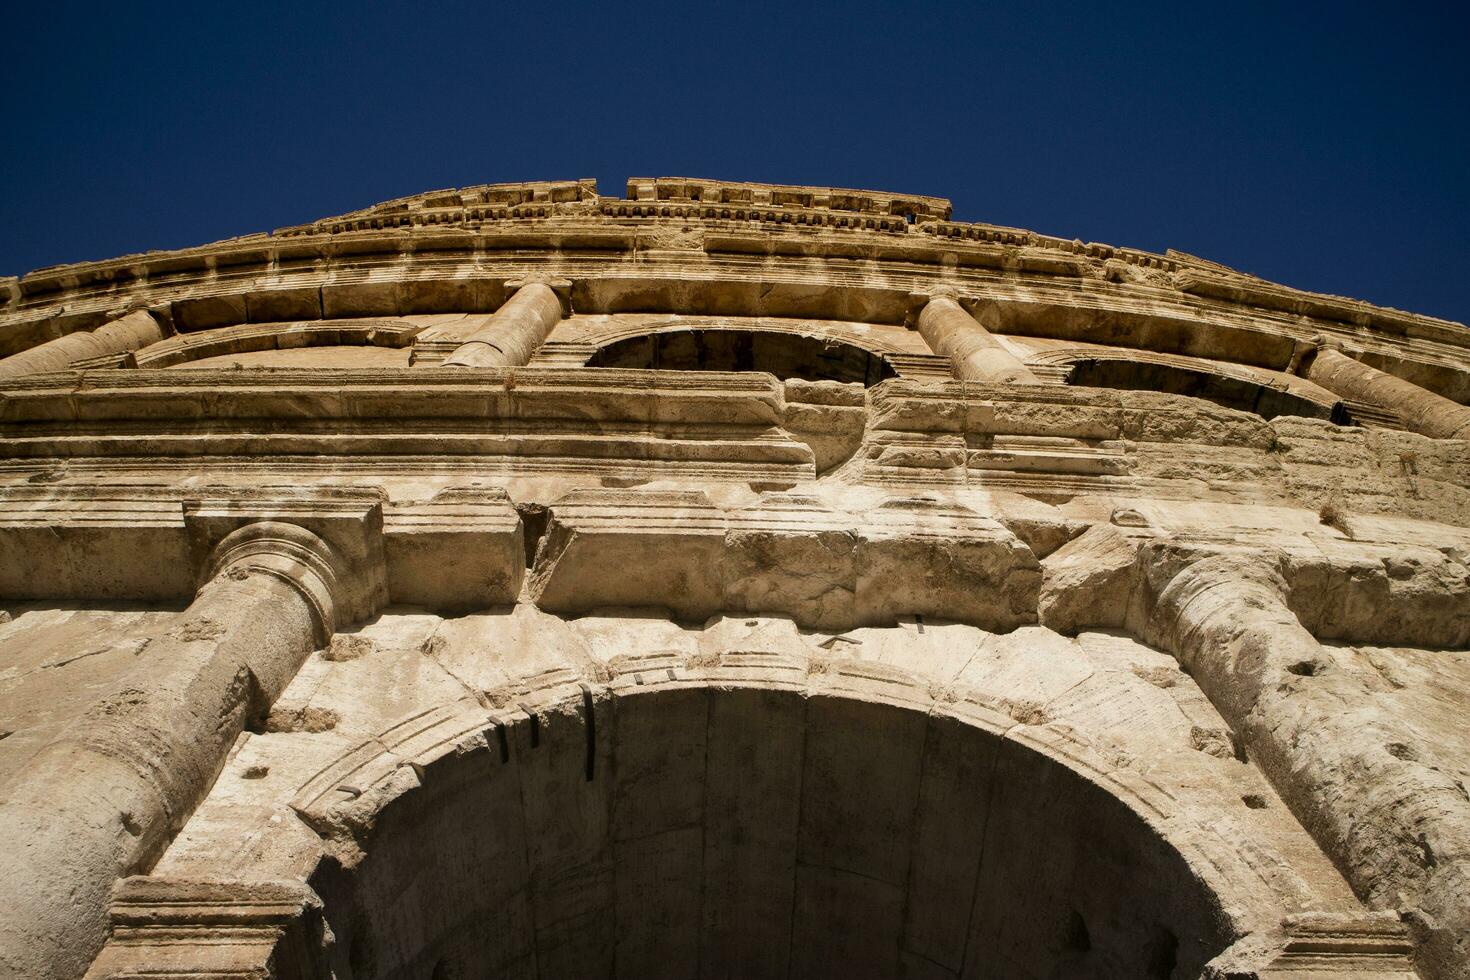 Constructive details of the Colosseum photo